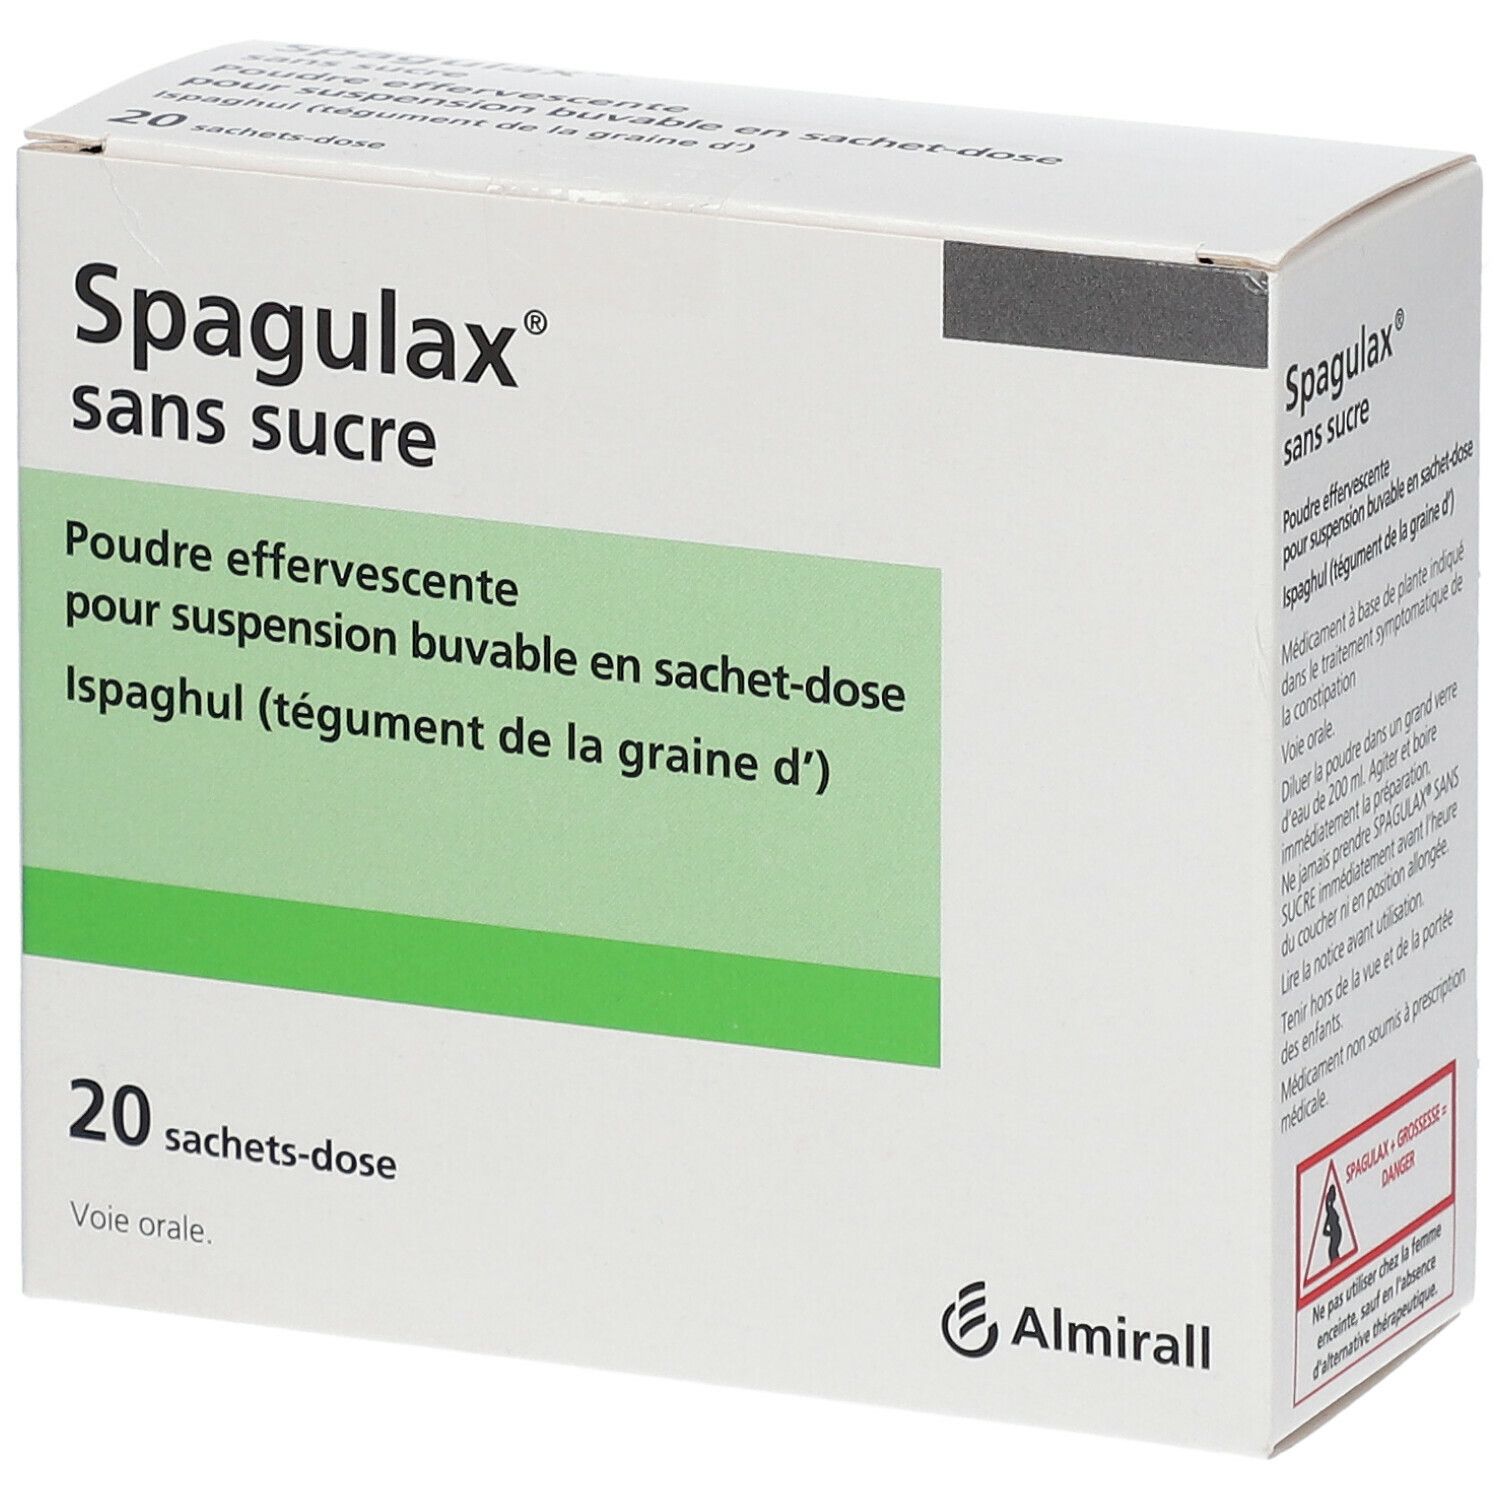 Spagulax® sans sucre